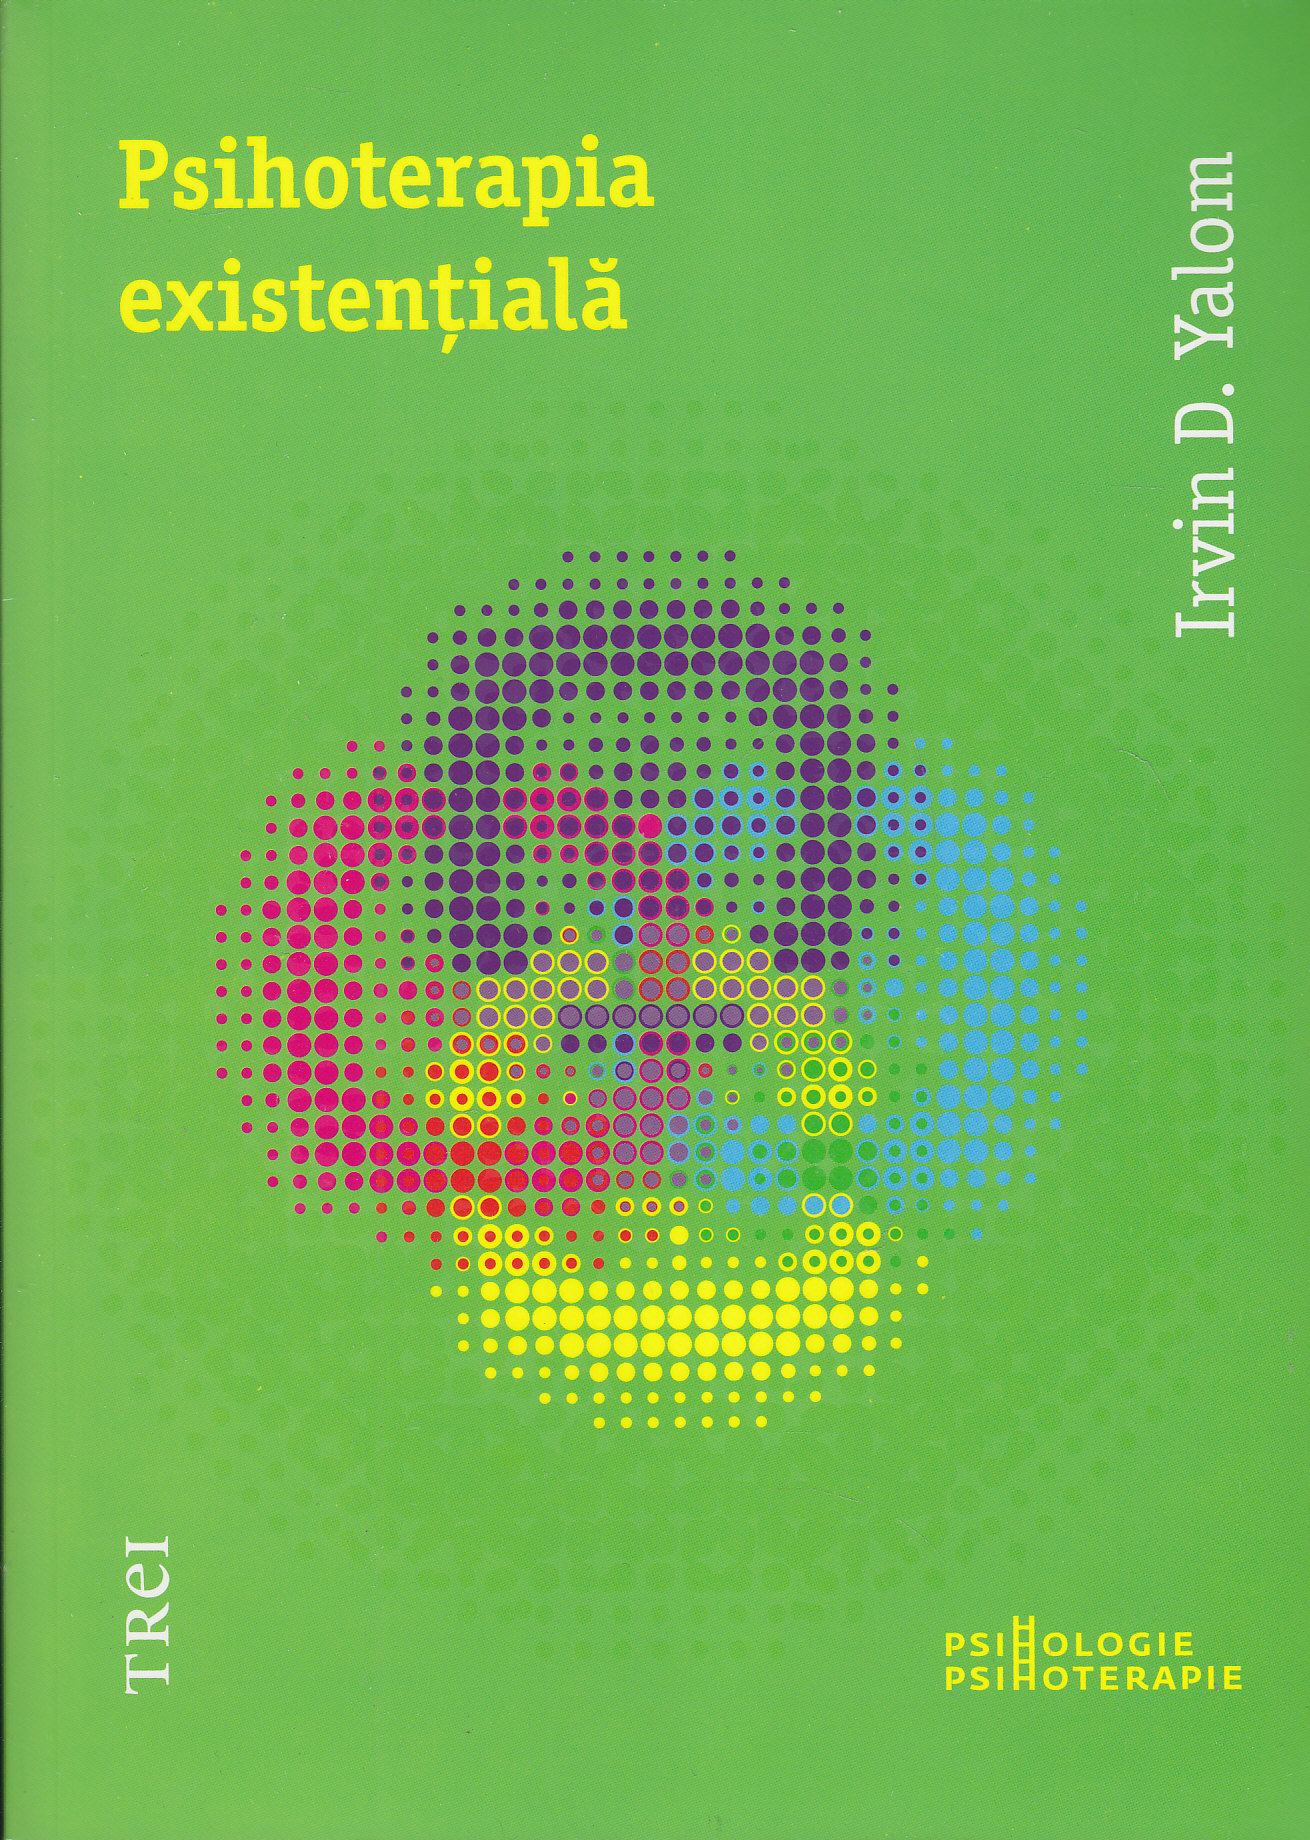 Psihoterapia existentiala ed.2012 - Irvin D. Yalom